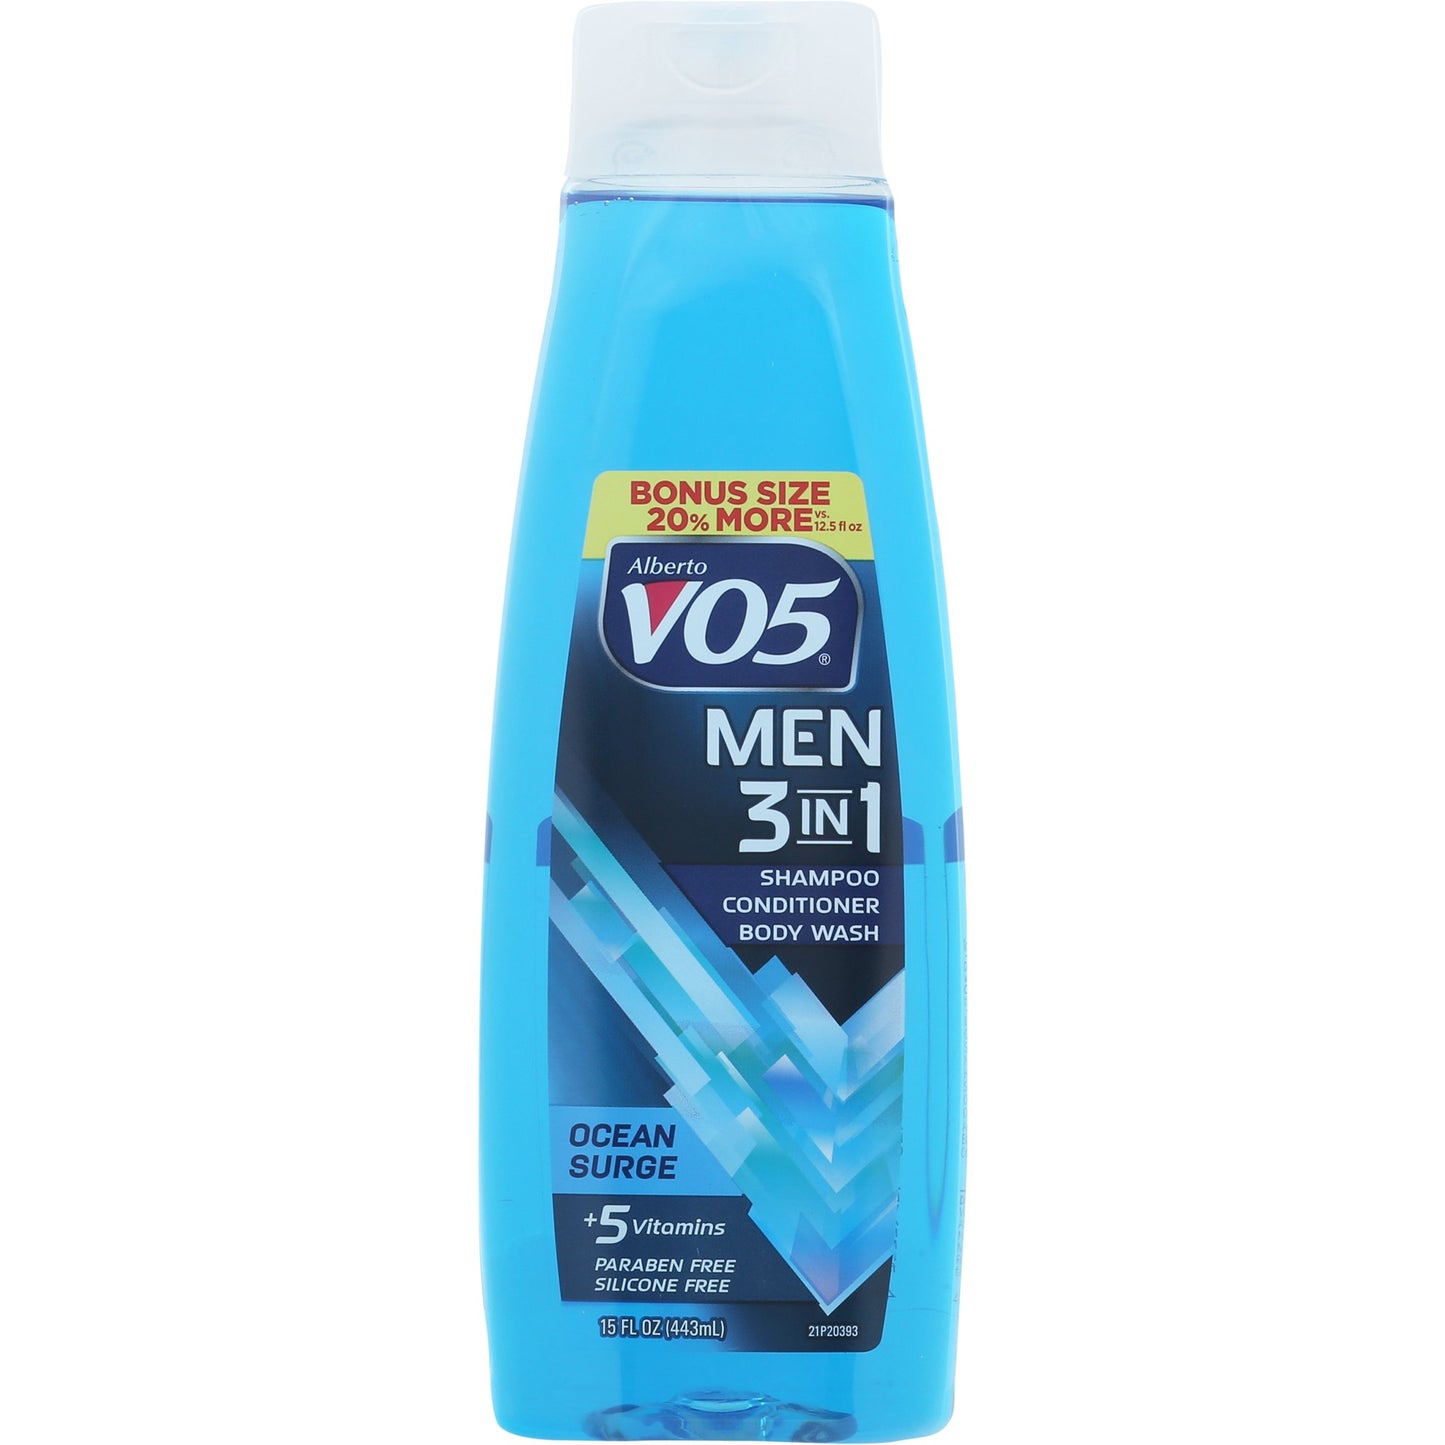 VO5 - Men 3 IN 1 - Shampoo / Conditioner / Body Wash Ocean Surge ( 15 FL OZ - 443 ML ) Large Size